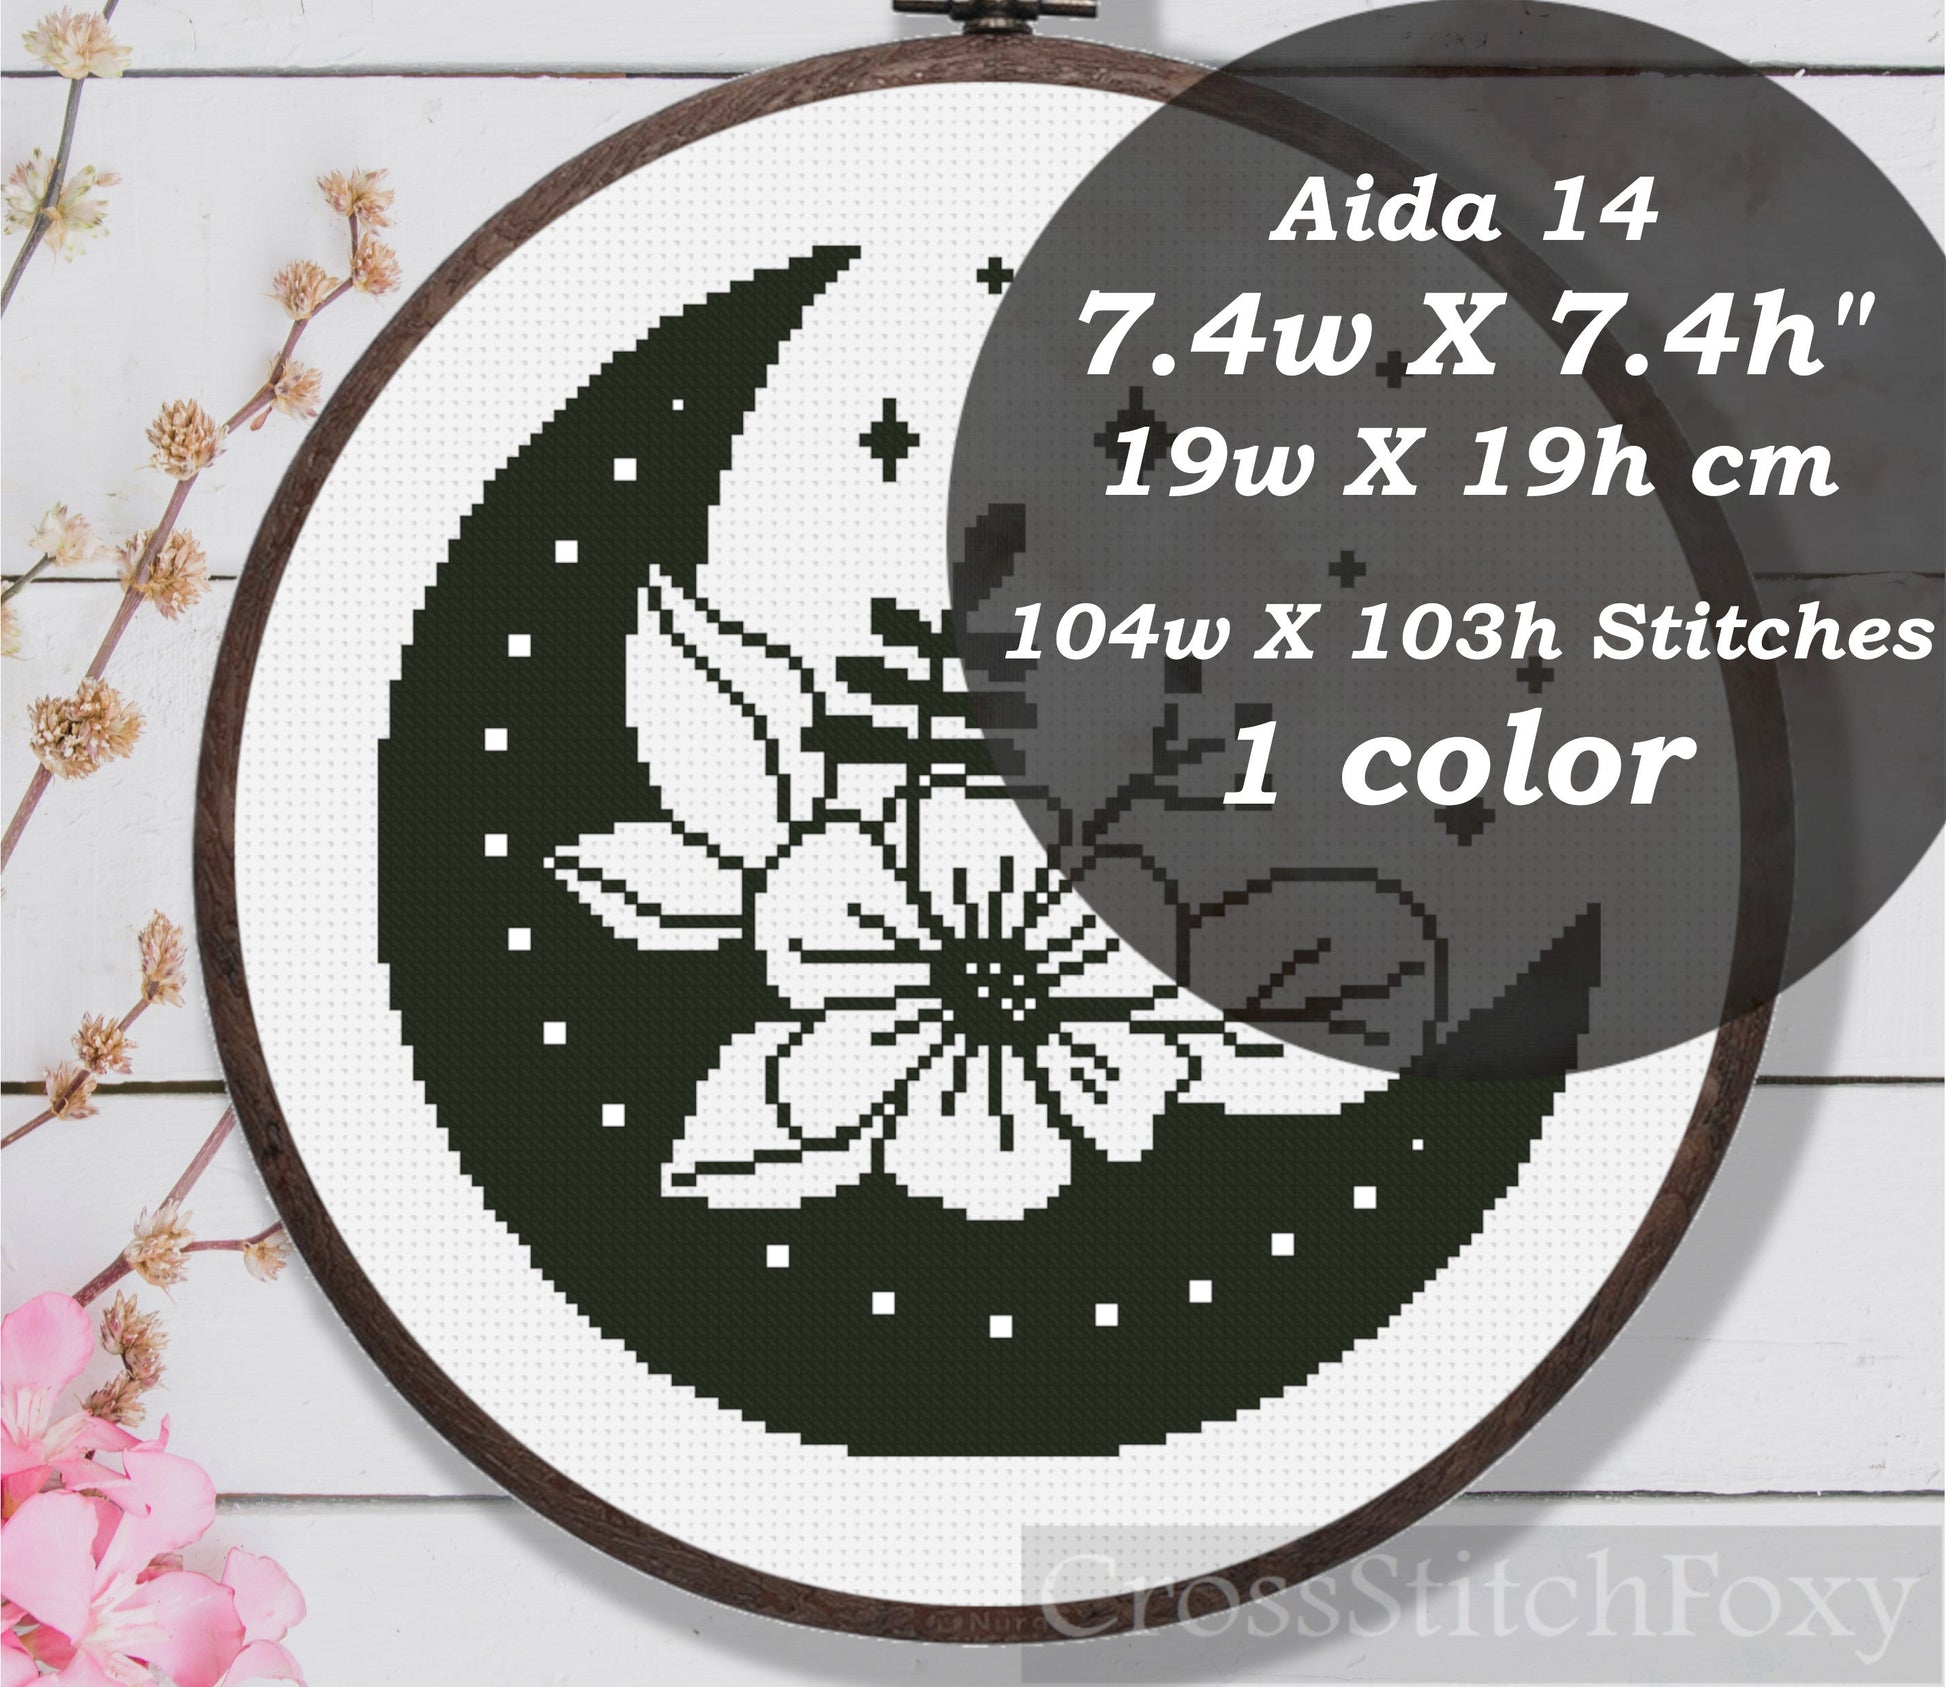 Mystical Moon Flowers cross stitch pattern